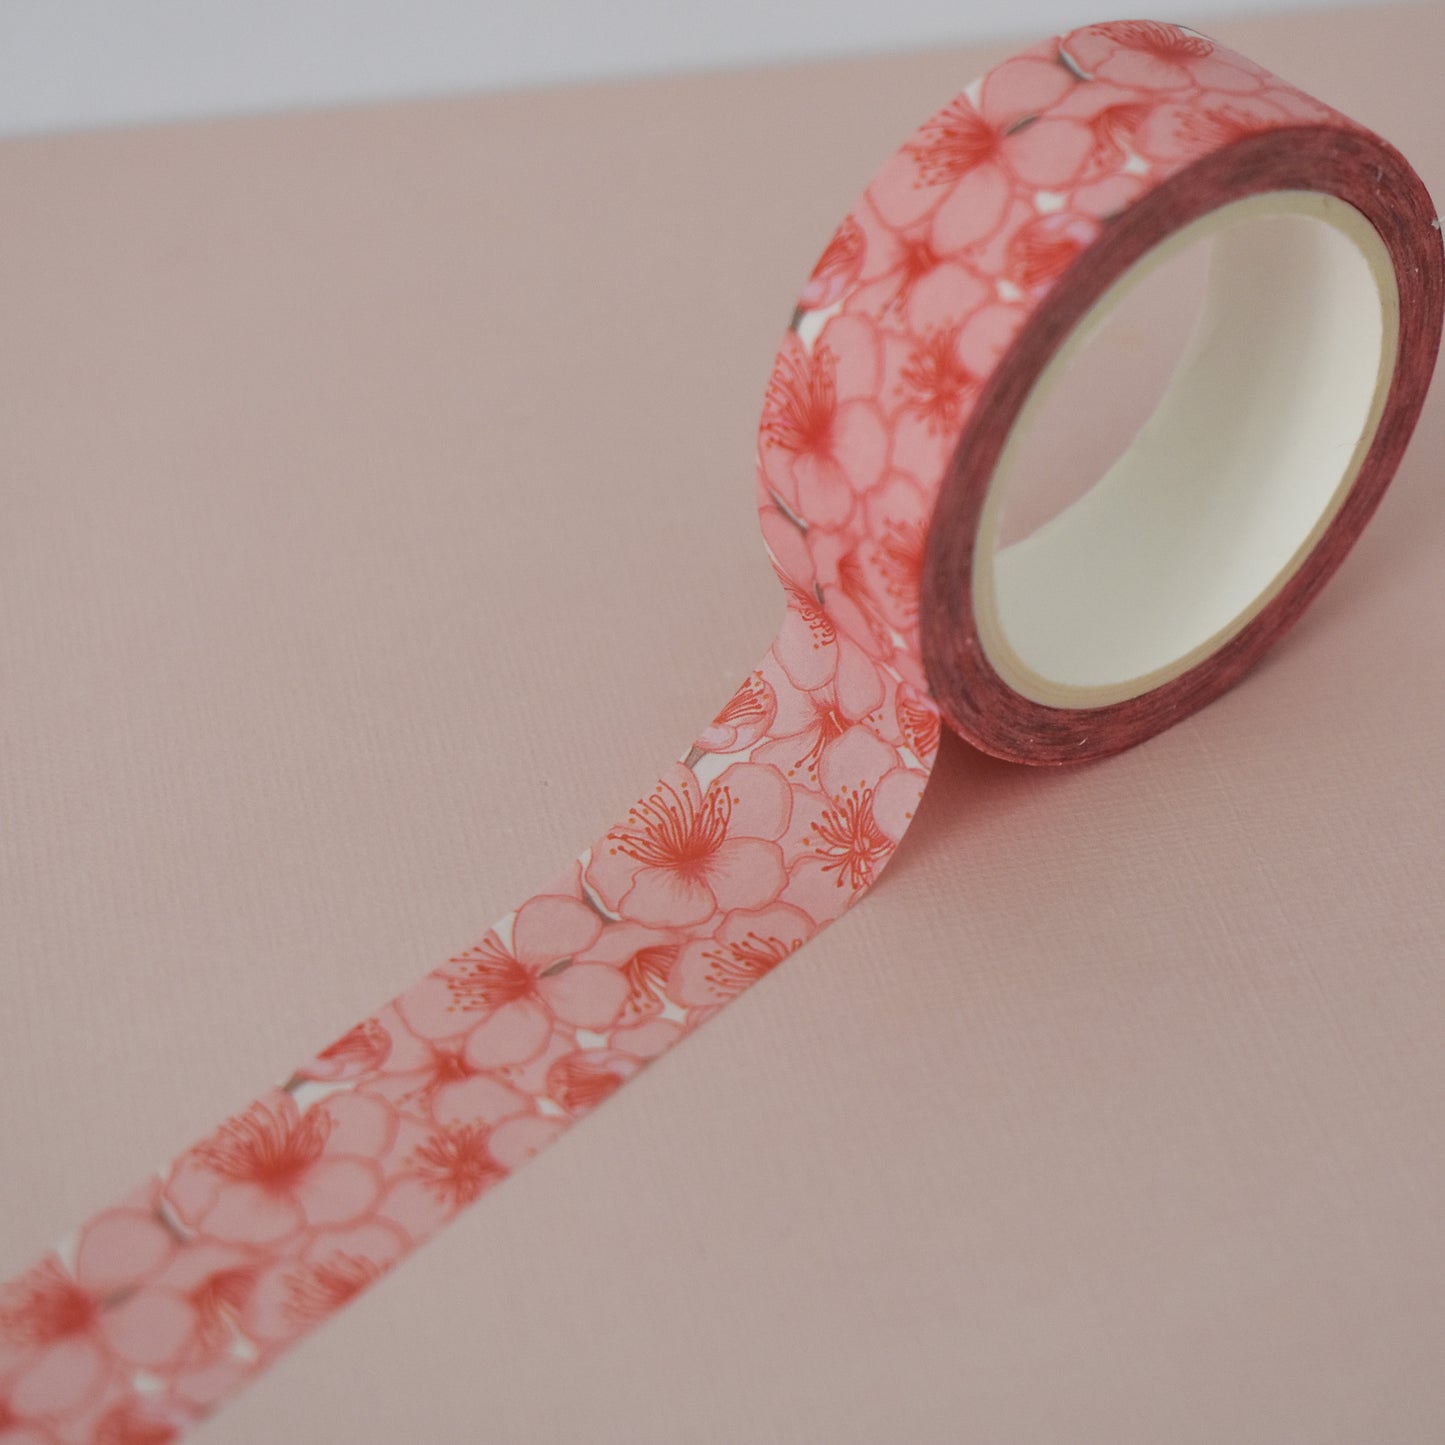 Blossom Washi Tape